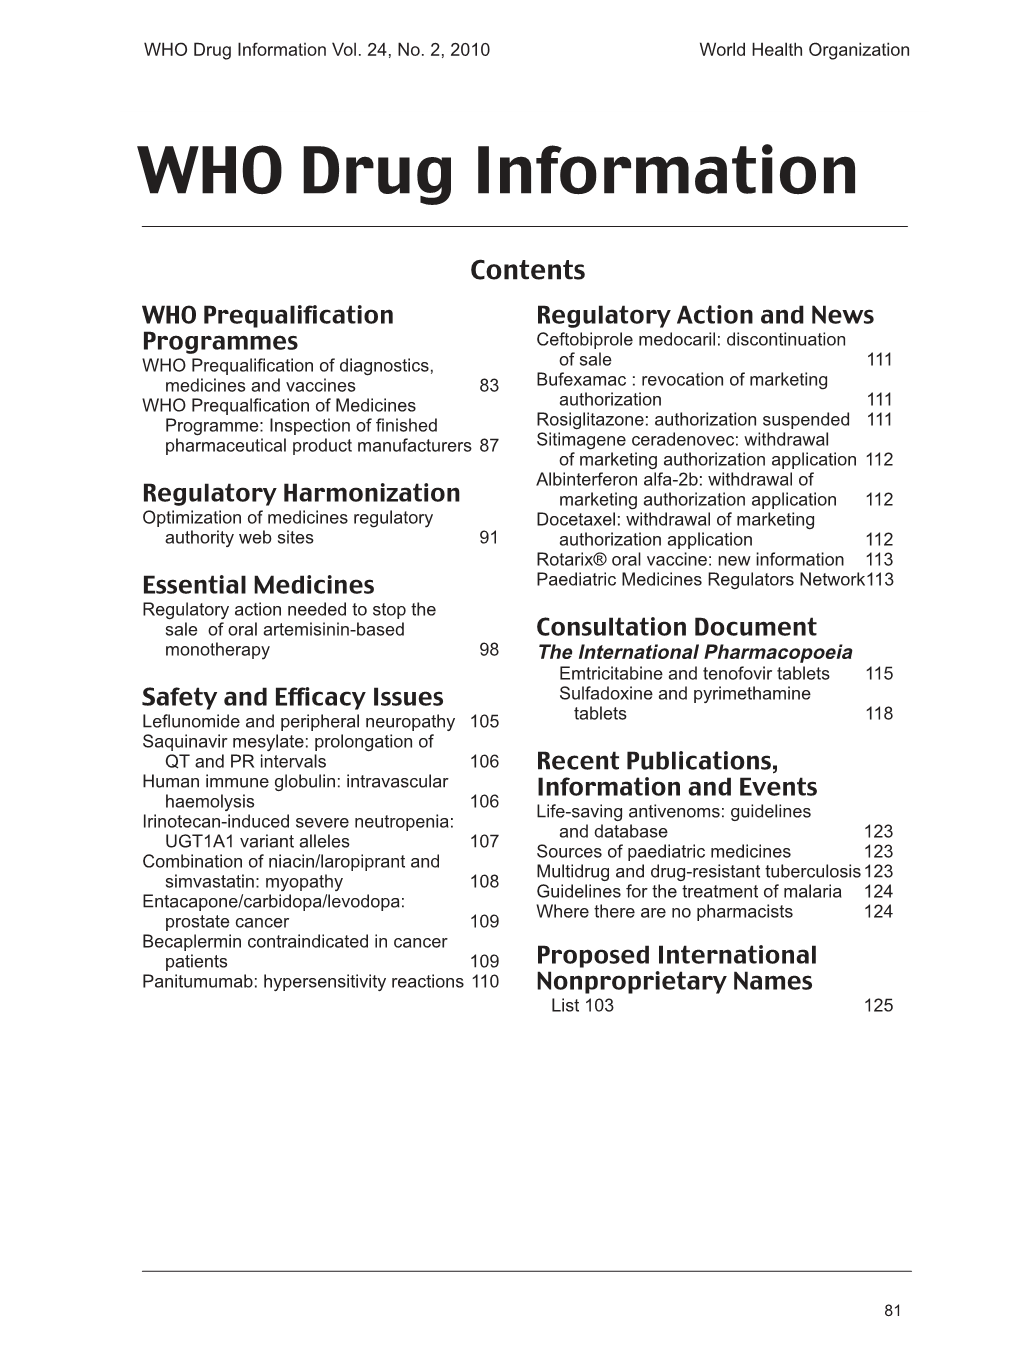 WHO Drug Information Vol. 24, No. 2, 2010 World Health Organization